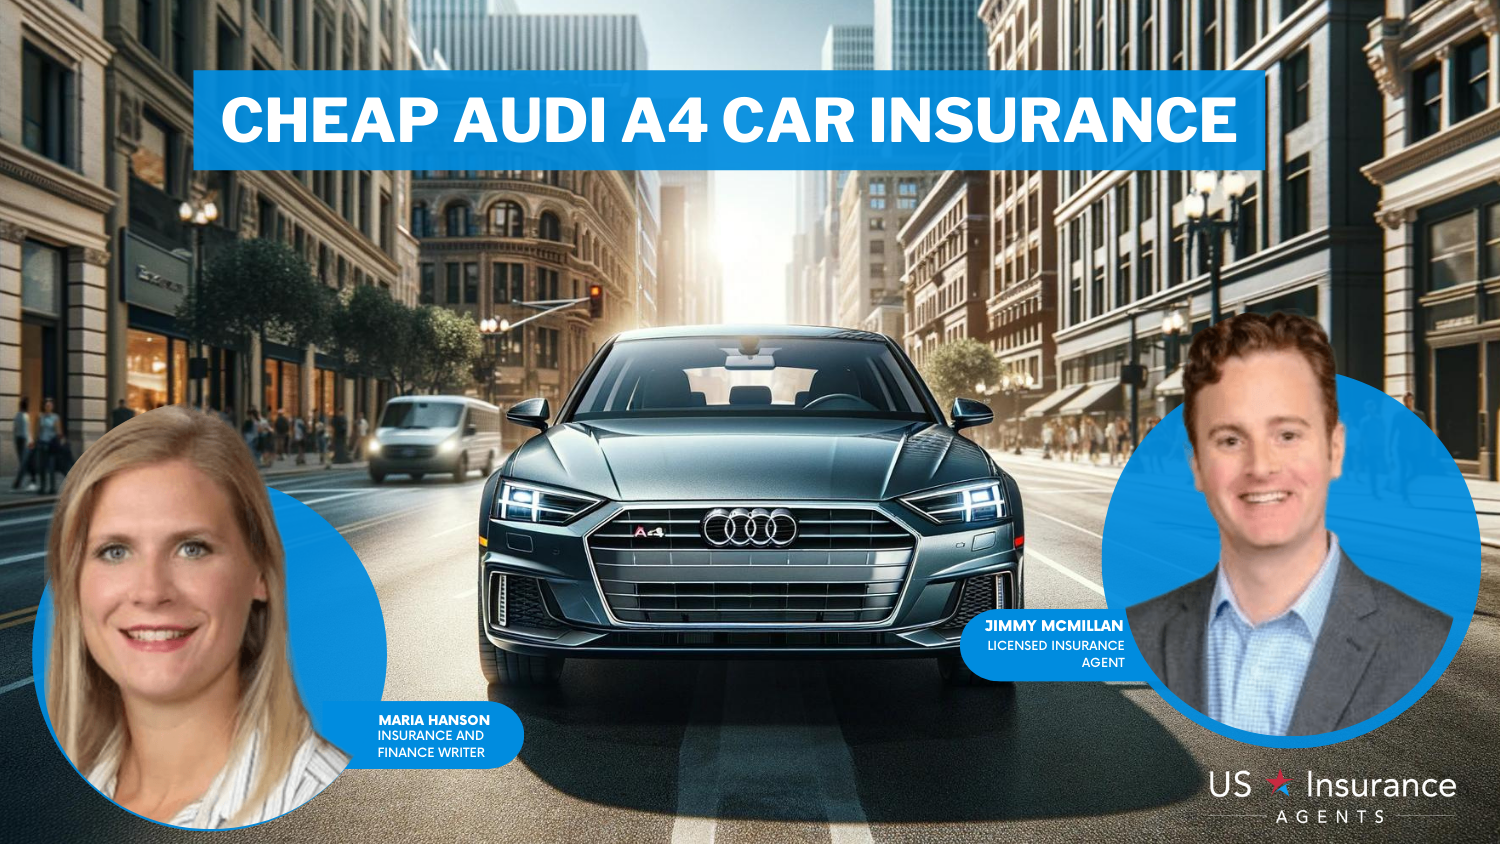 Cheap Audi A4 Car Insurance: State Farm, Progressive, Allstate